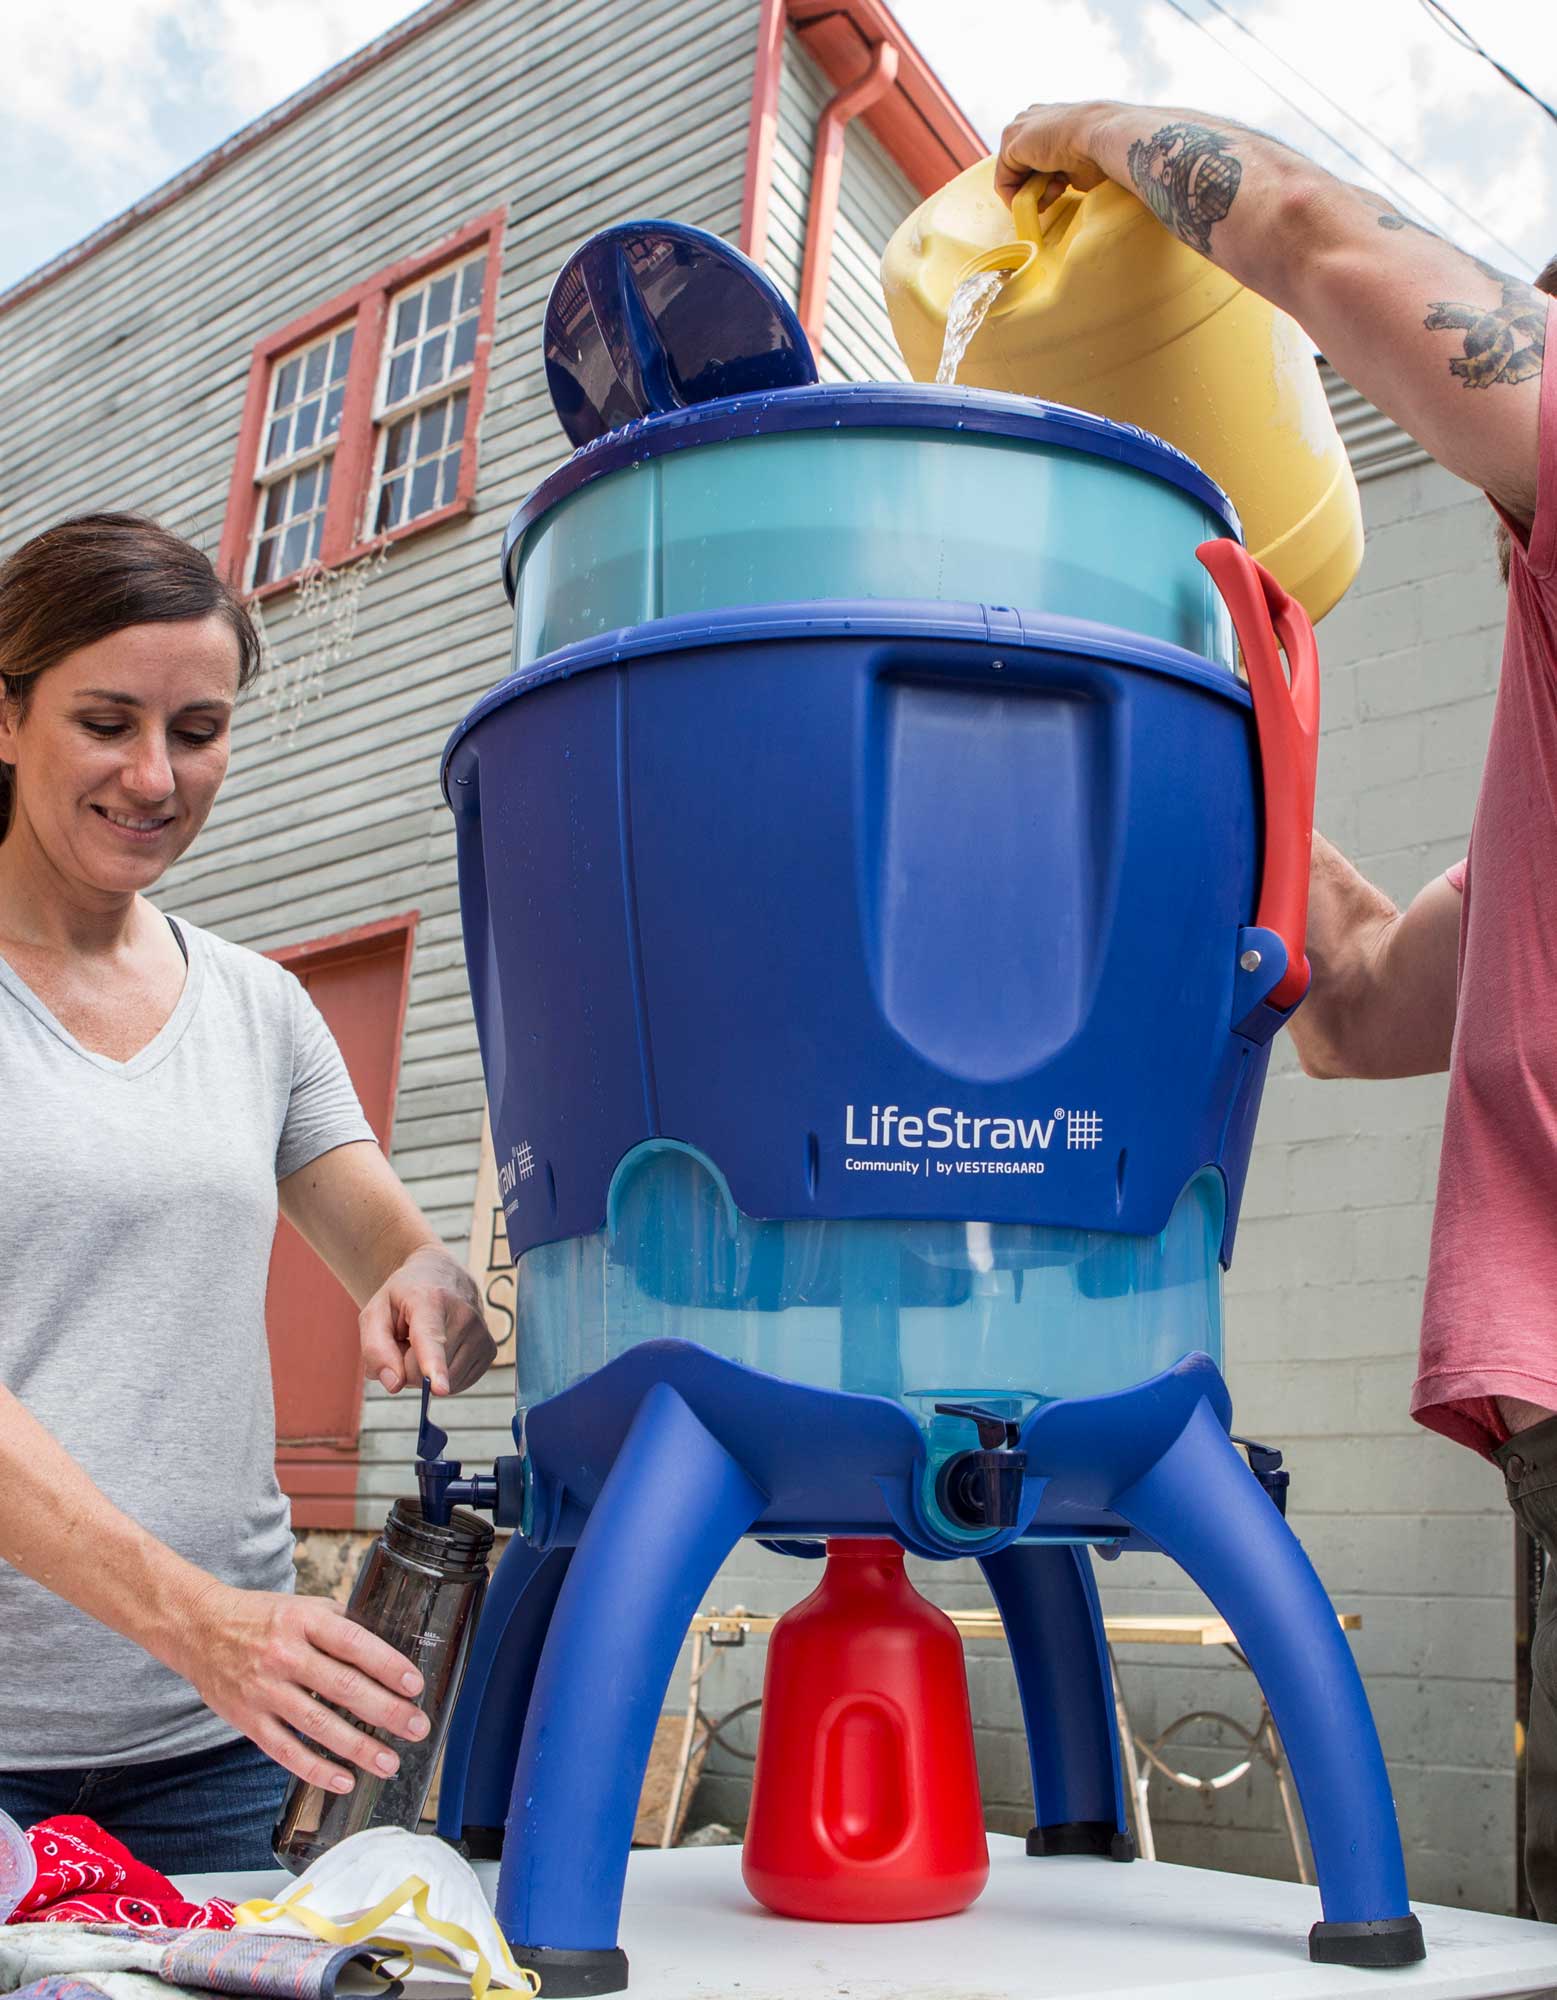 LifeStraw Community High-Volume Water Purifier